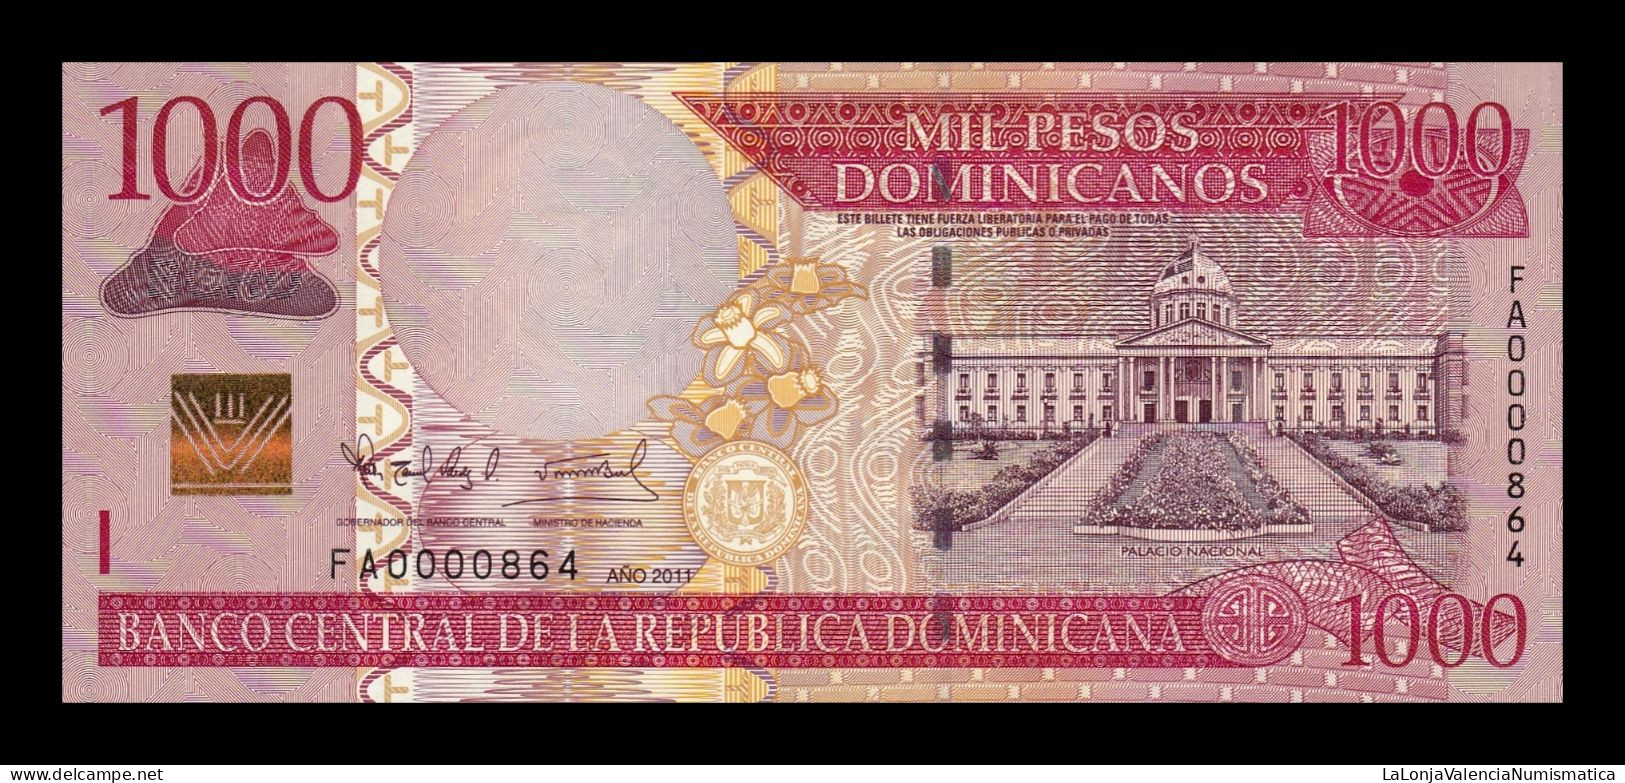 República Dominicana 1000 Pesos Dominicanos 2011 Pick 187a Low Serial 864 Sc Unc - Dominicana